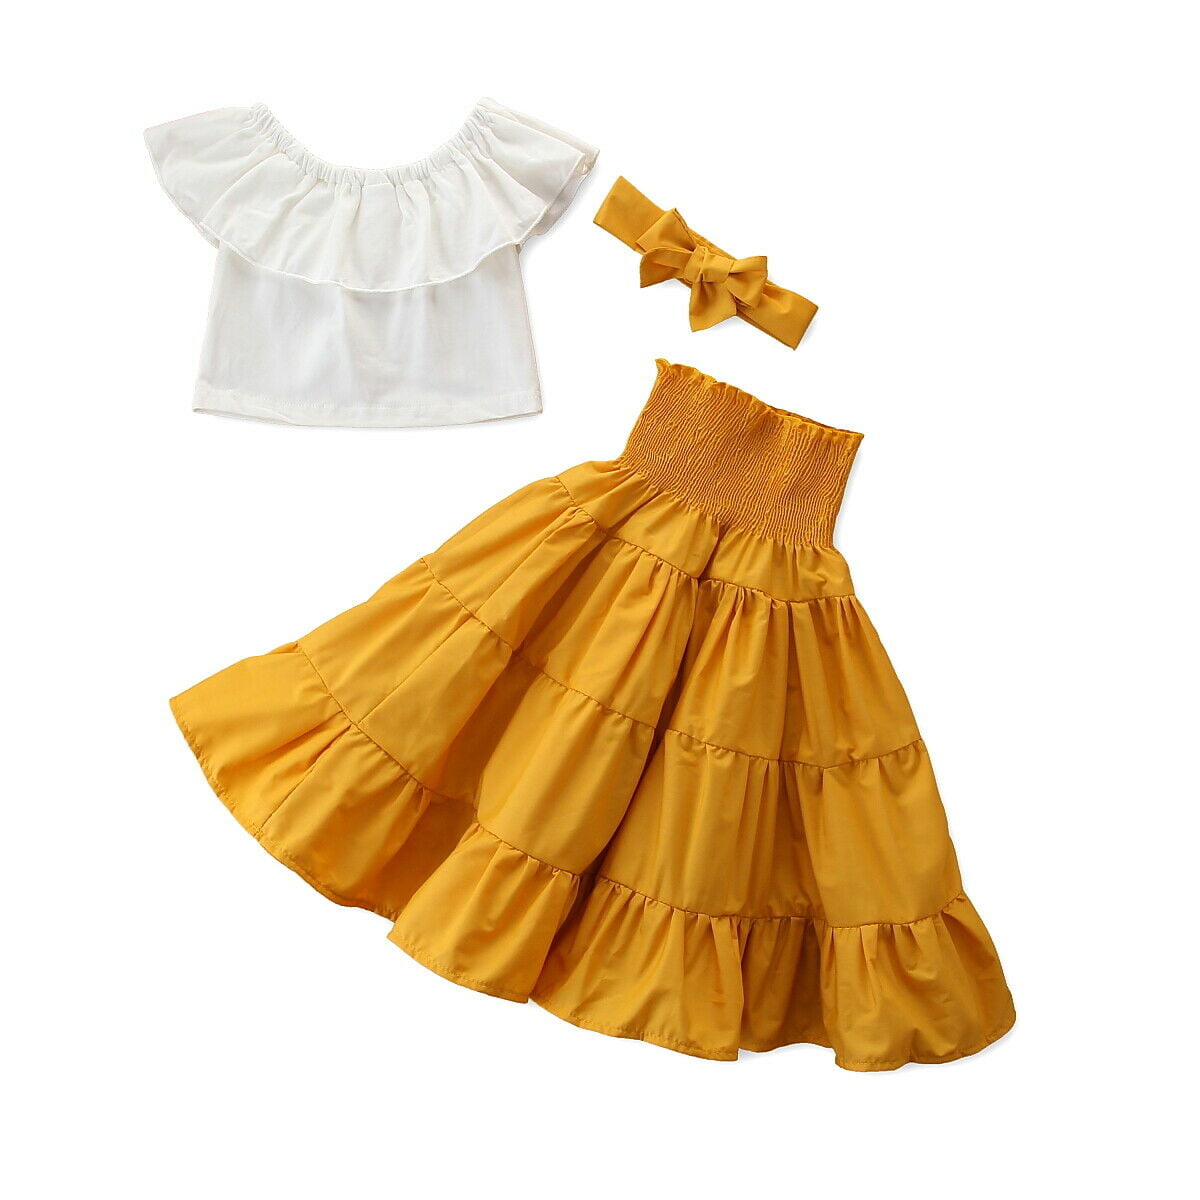 Newmao Infant Girls Summer Off Shoulder Print Ruffled Casual Beach Party Dress 